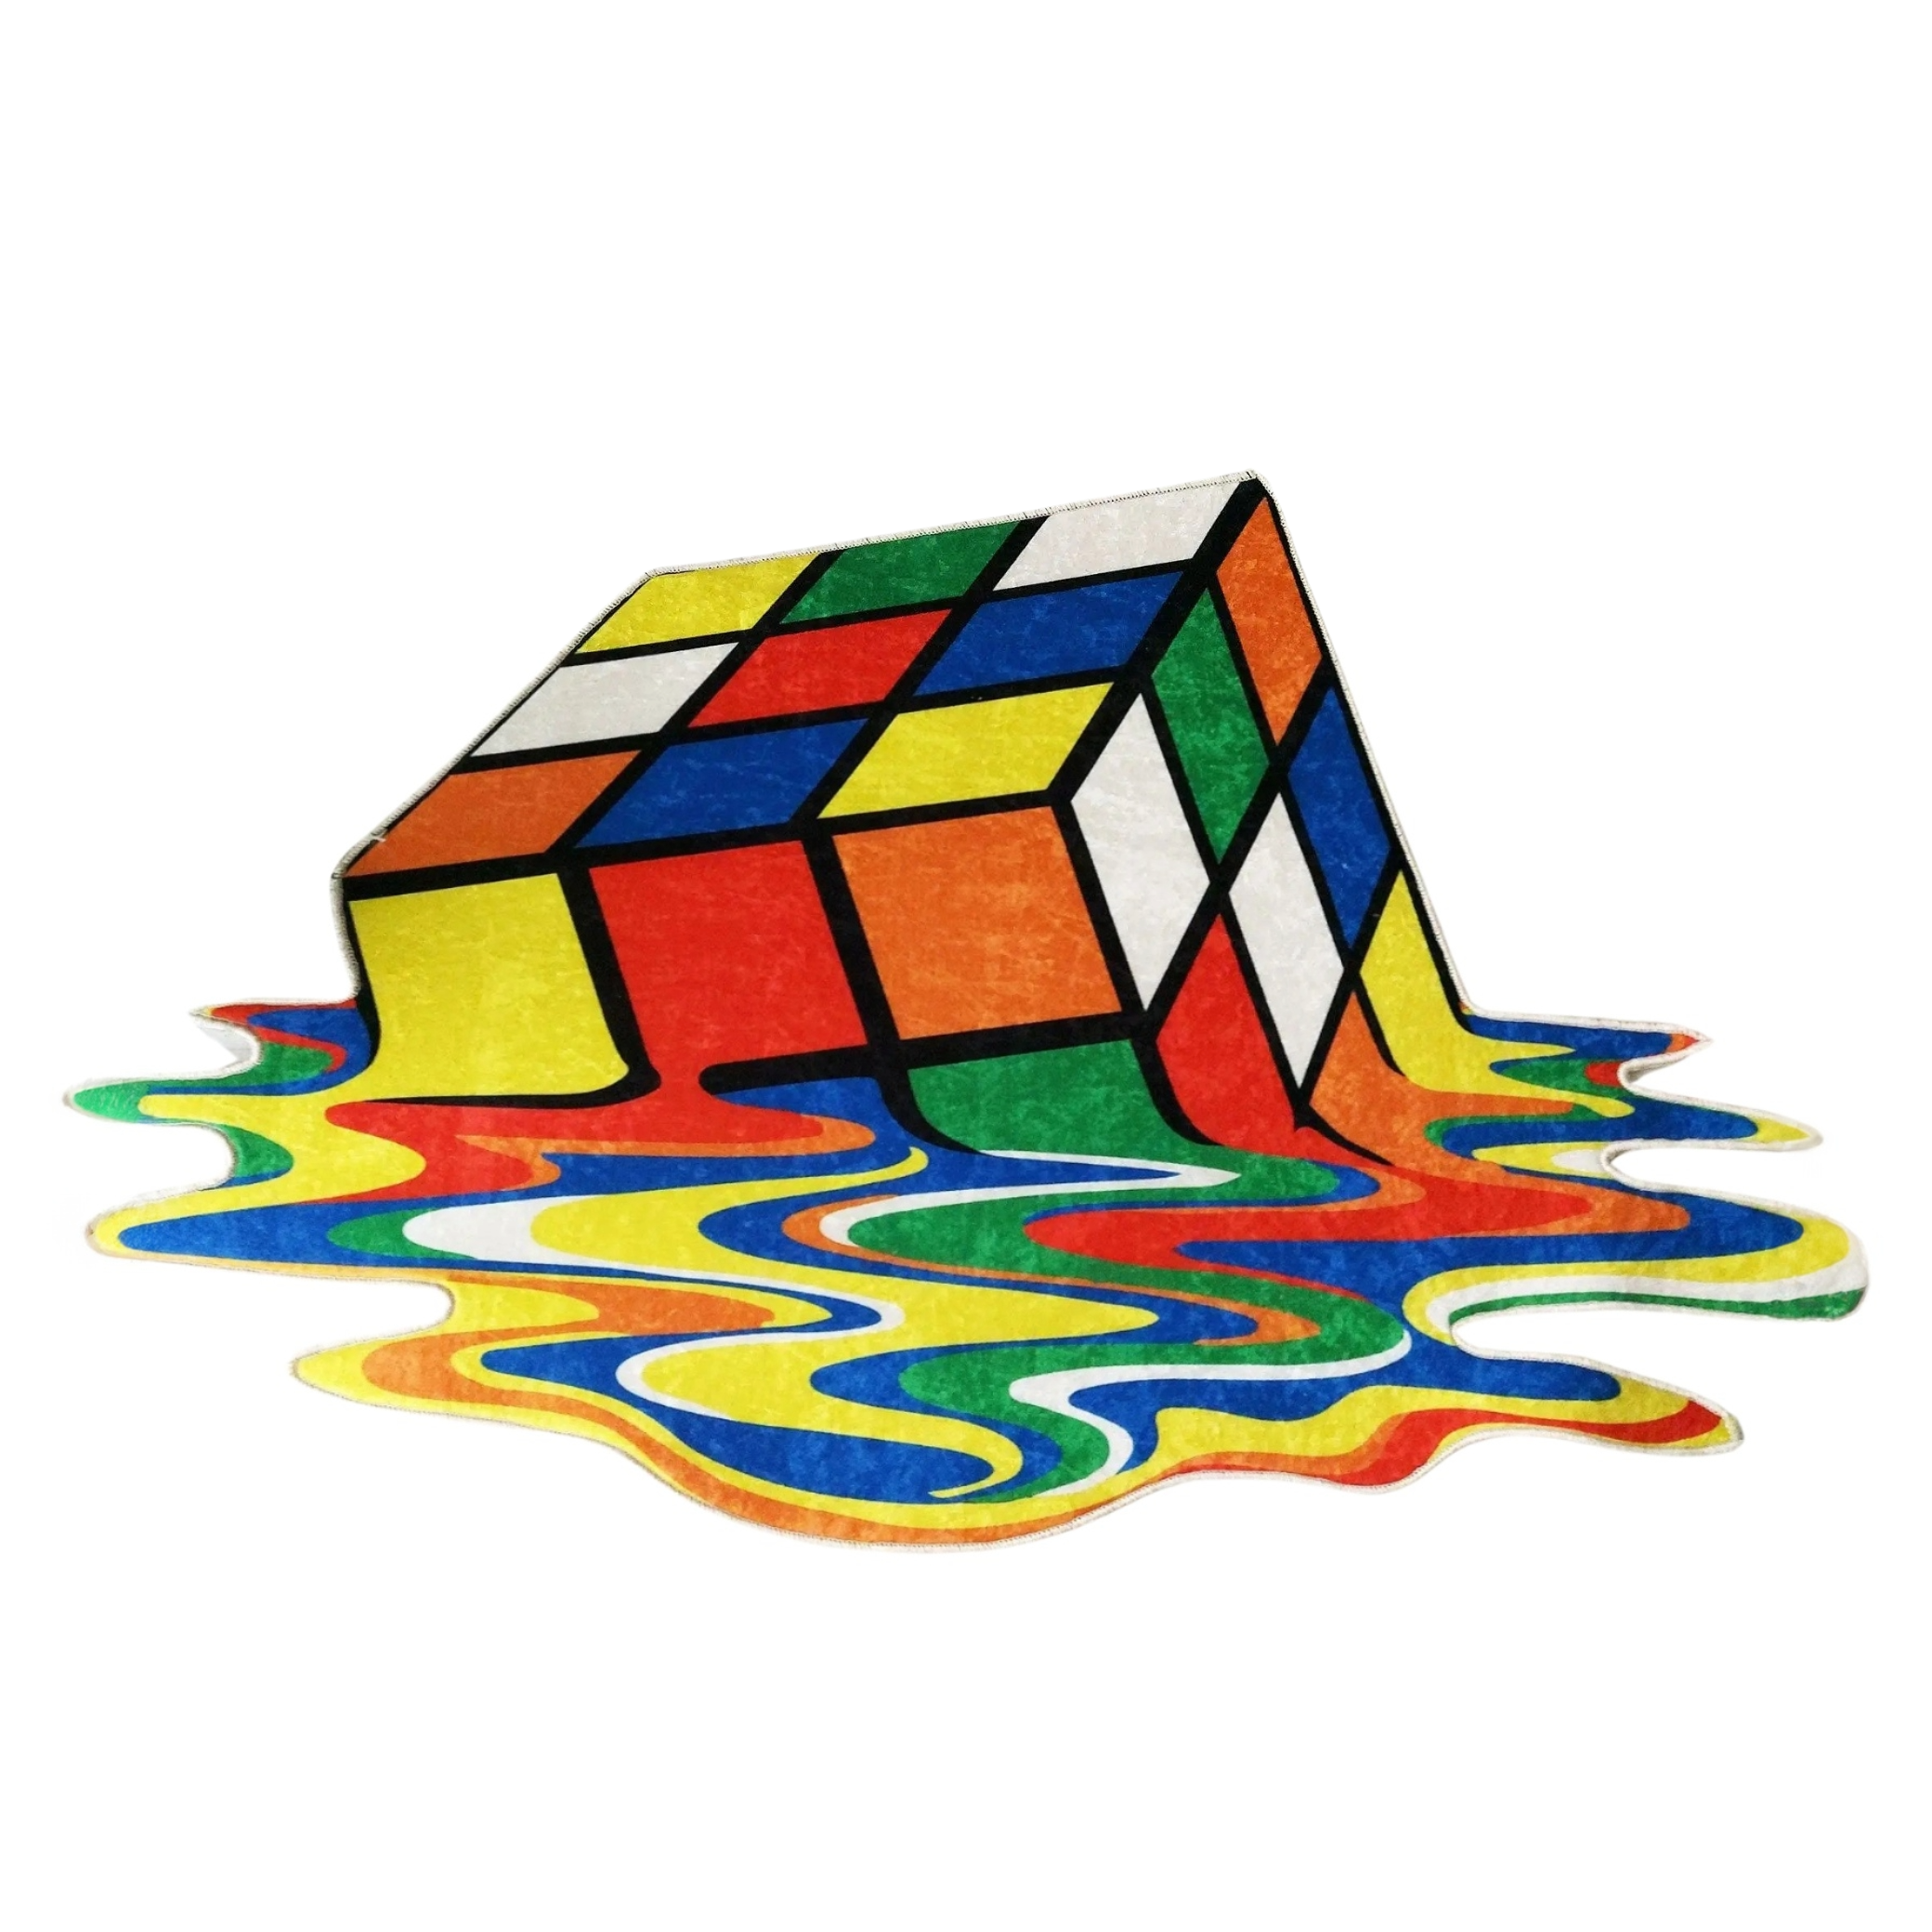 Melting Rubik's Cube Rug